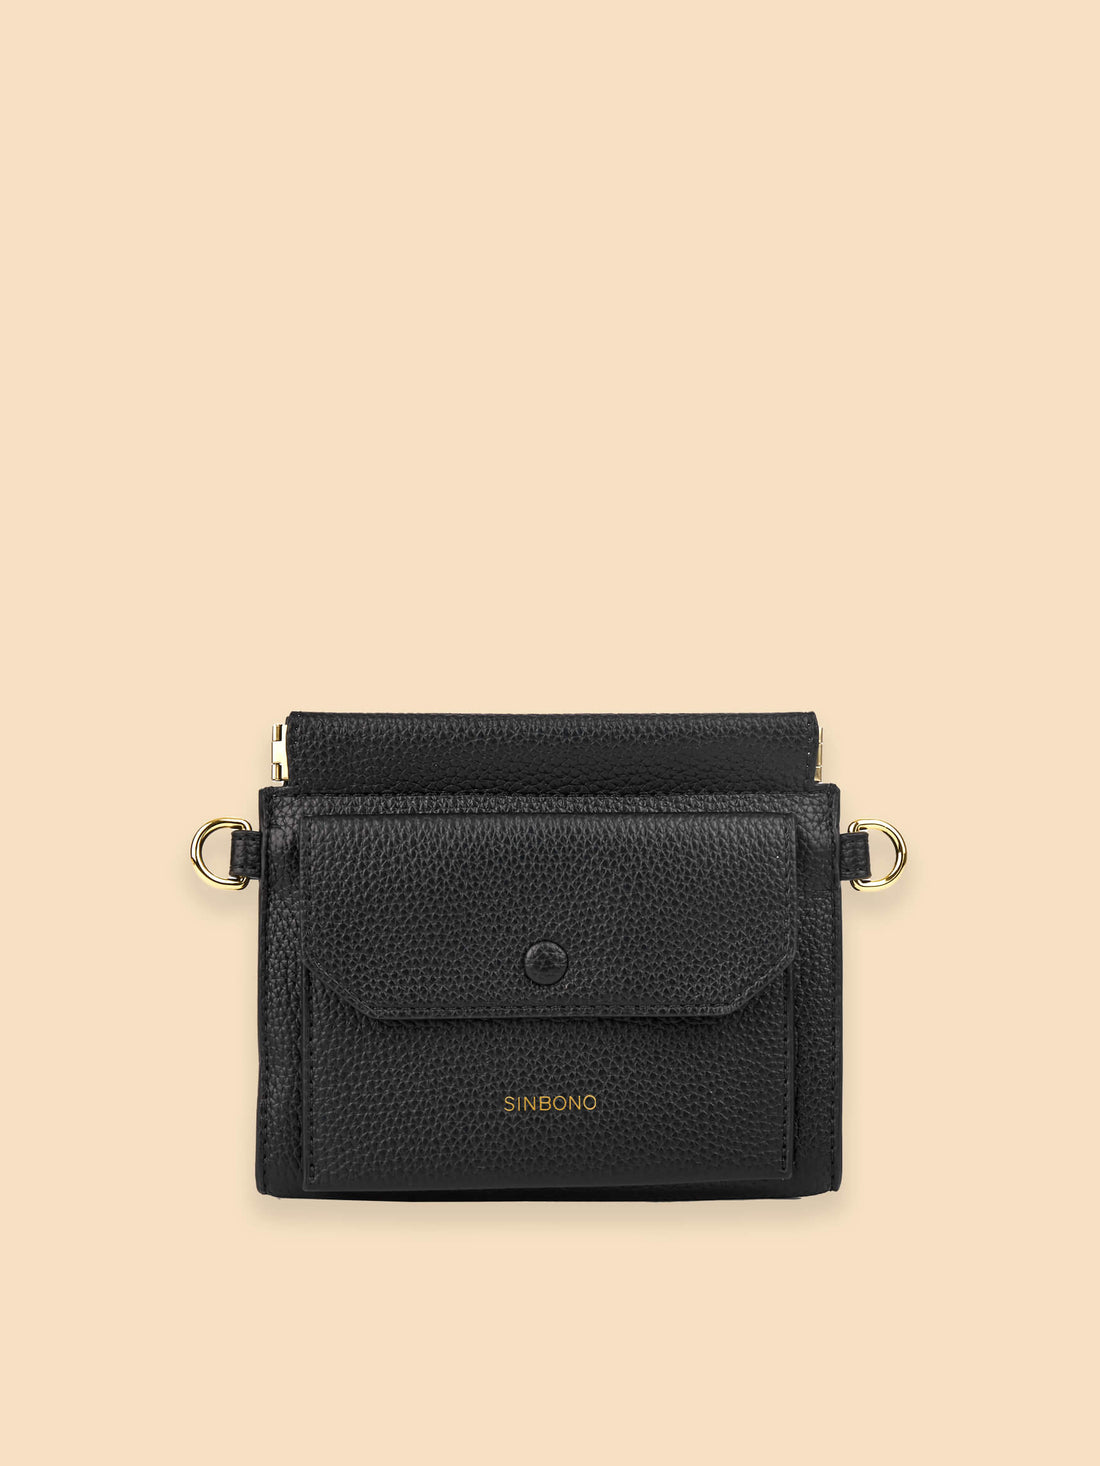 SINBONO Black Crossbody Bag- High-quality Soft Vegan Leather Bag